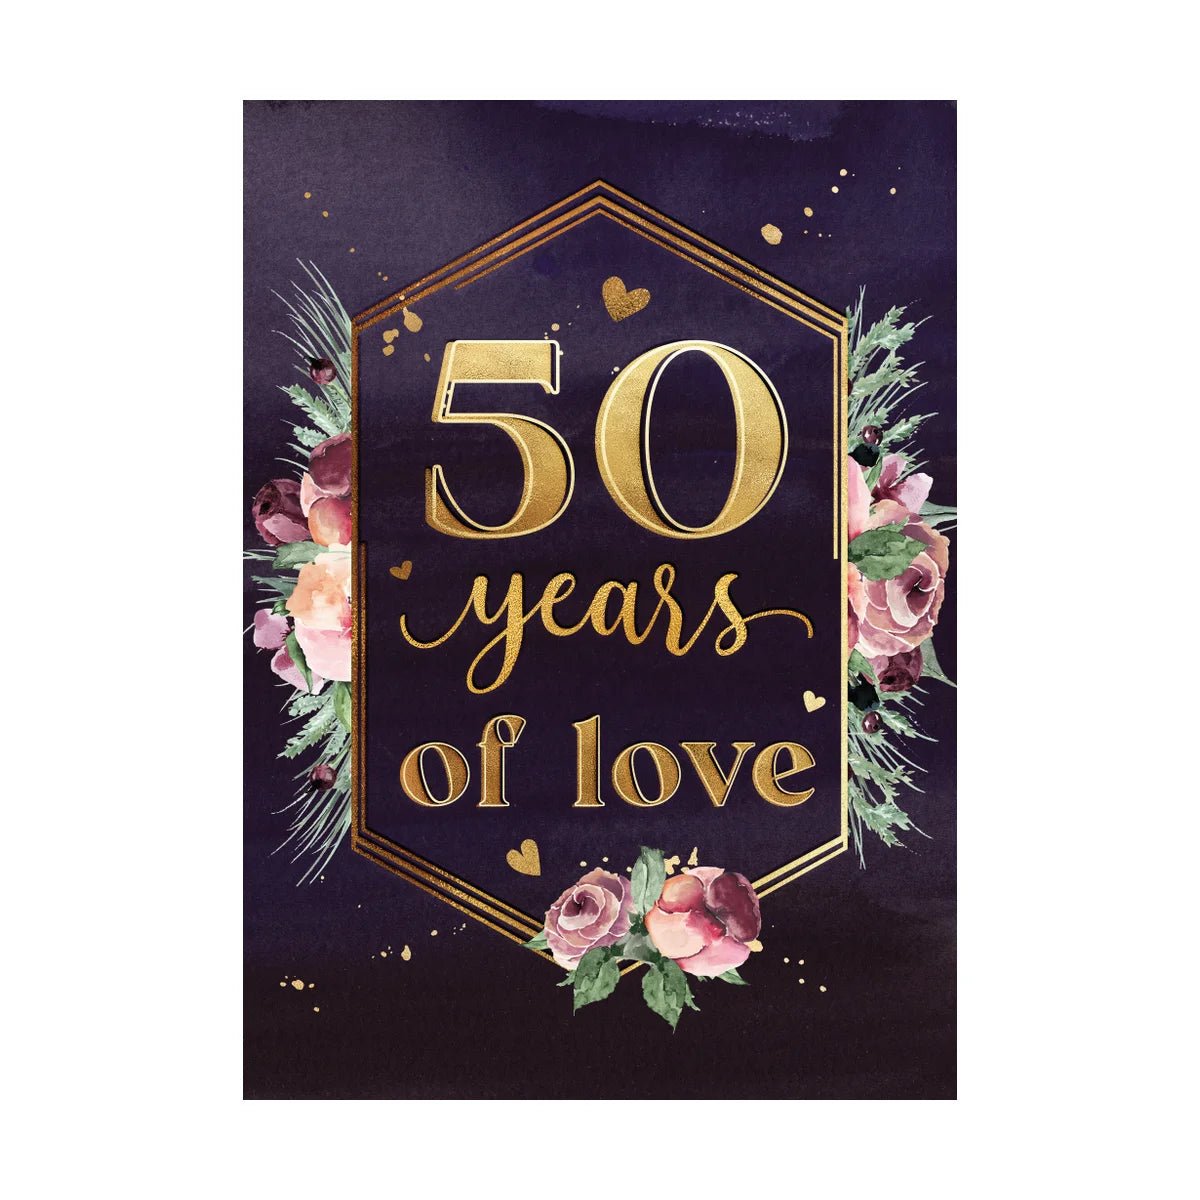 50 Years Of Love - Greeting Card - Anniversary